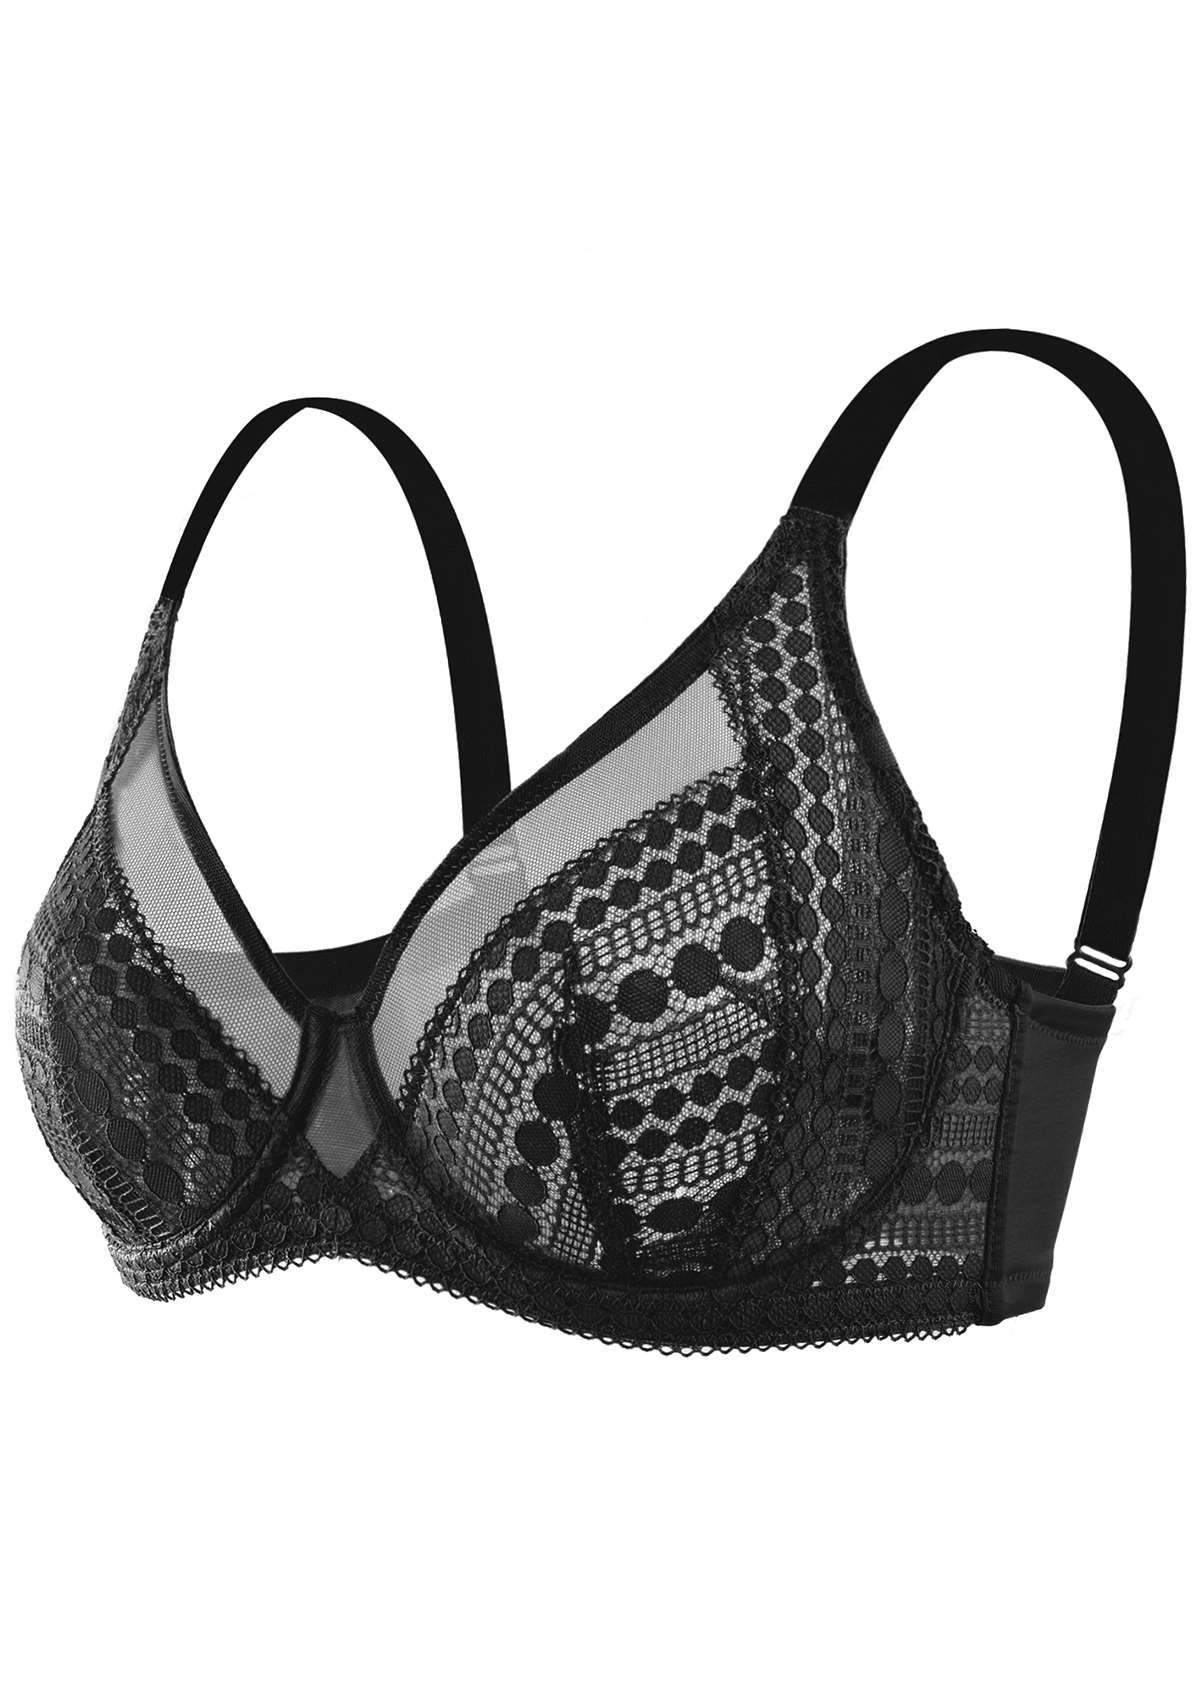 HSIA Heroine Matching Bra And Panties: Unlined Lace Unpadded Bra - Black / 38 / C